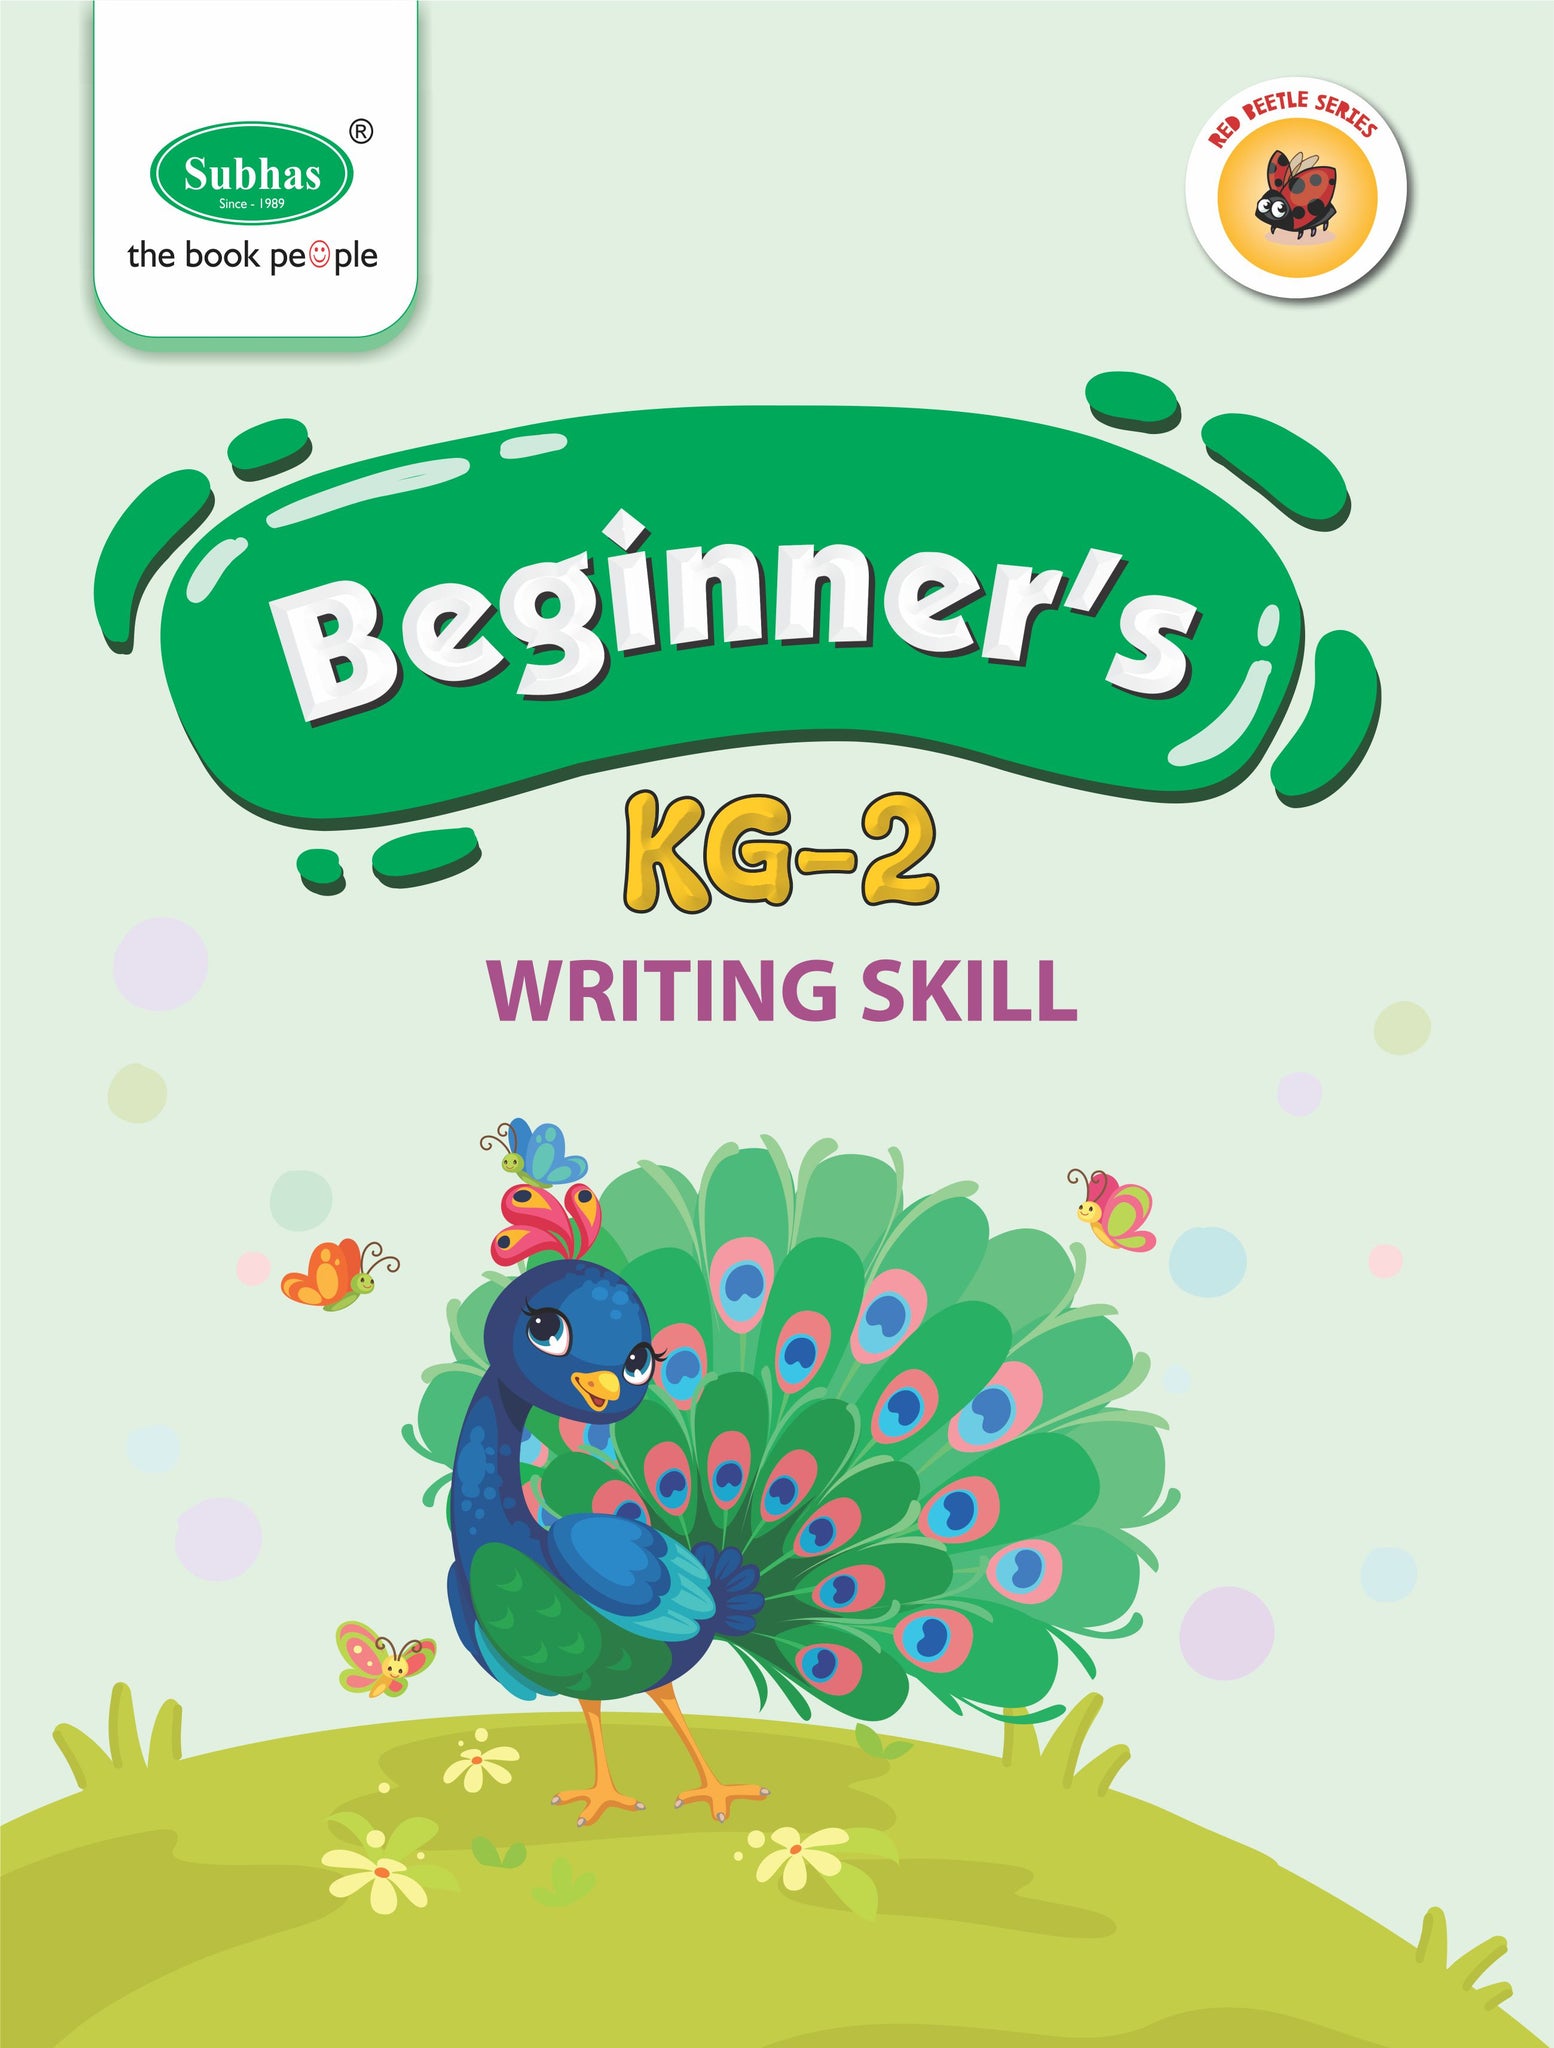 Begineer's KG-2 Writing Skill